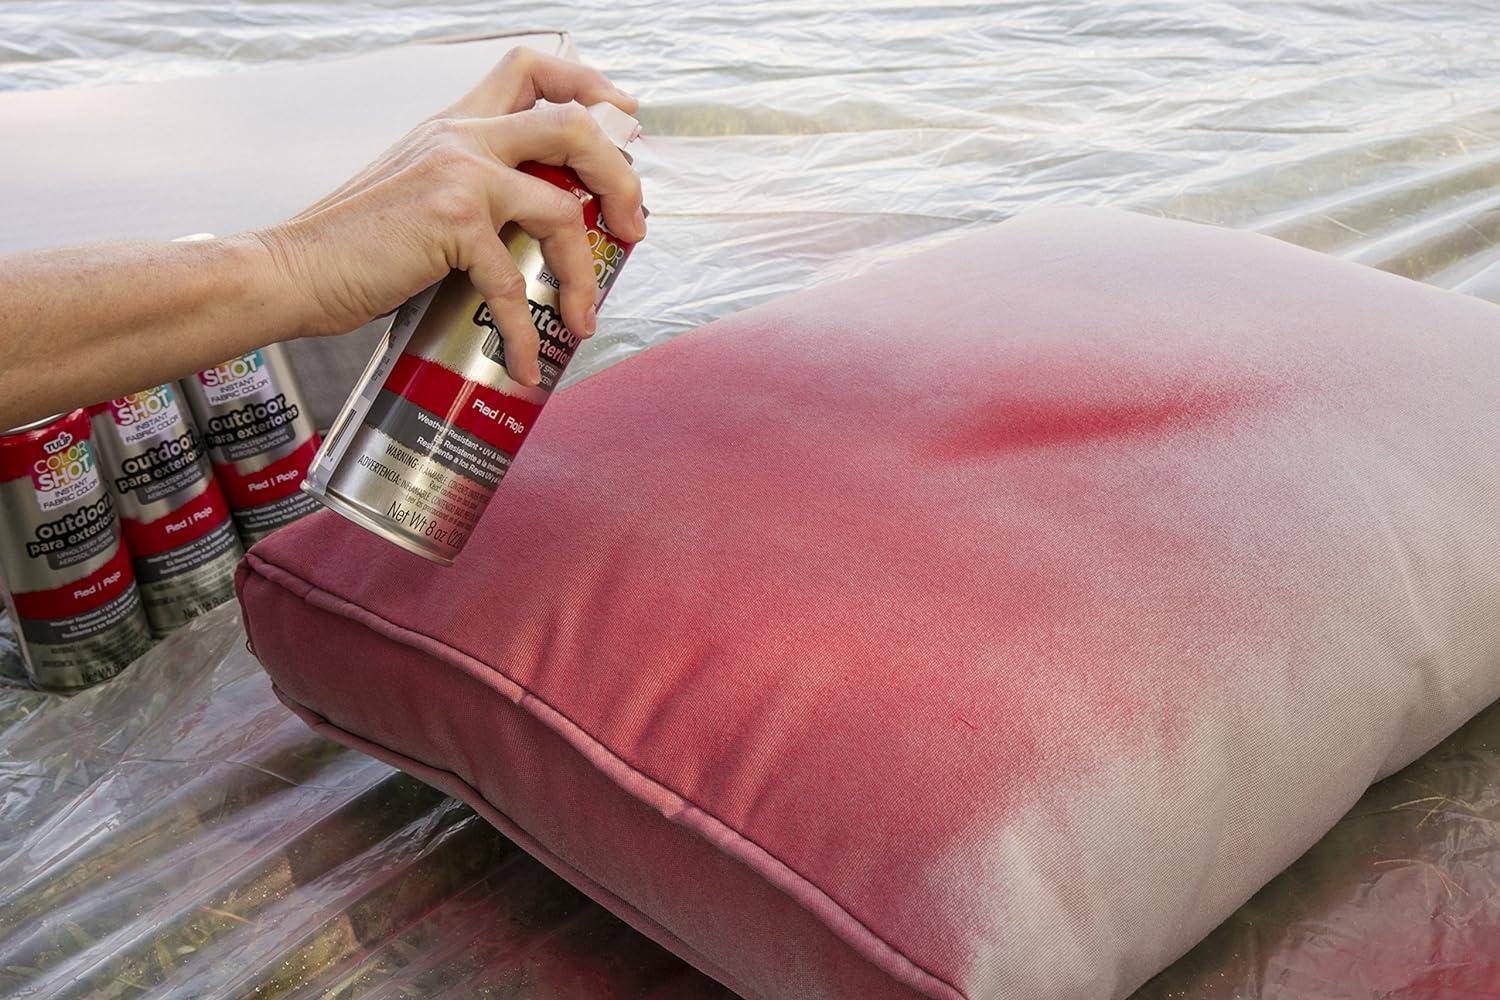 Upholstery Spray Fabric Paint 8oz-Hunter Green 